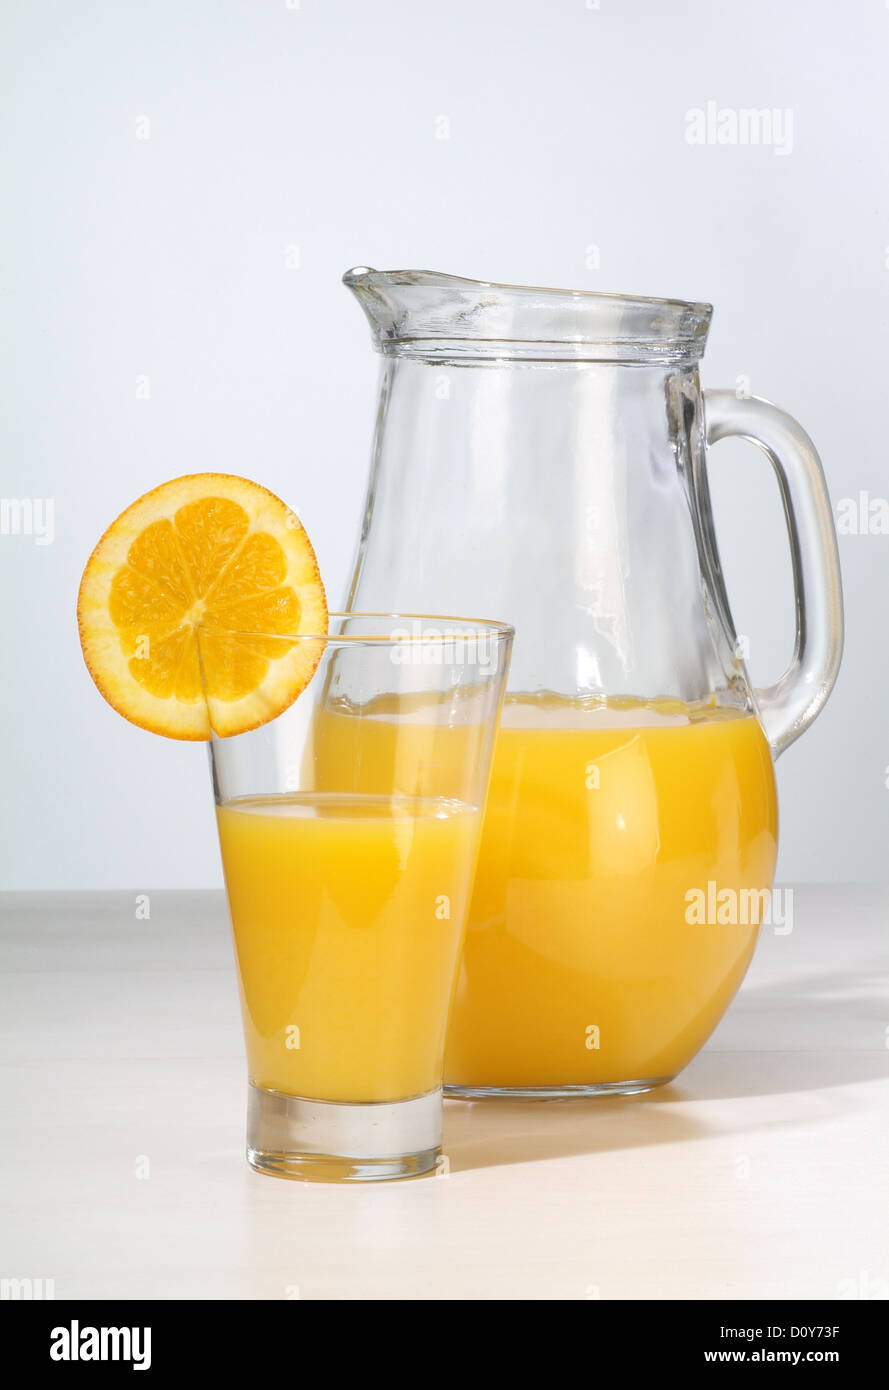 https://c8.alamy.com/comp/D0Y73F/hamburg-germany-a-glass-and-a-jug-of-orange-juice-D0Y73F.jpg